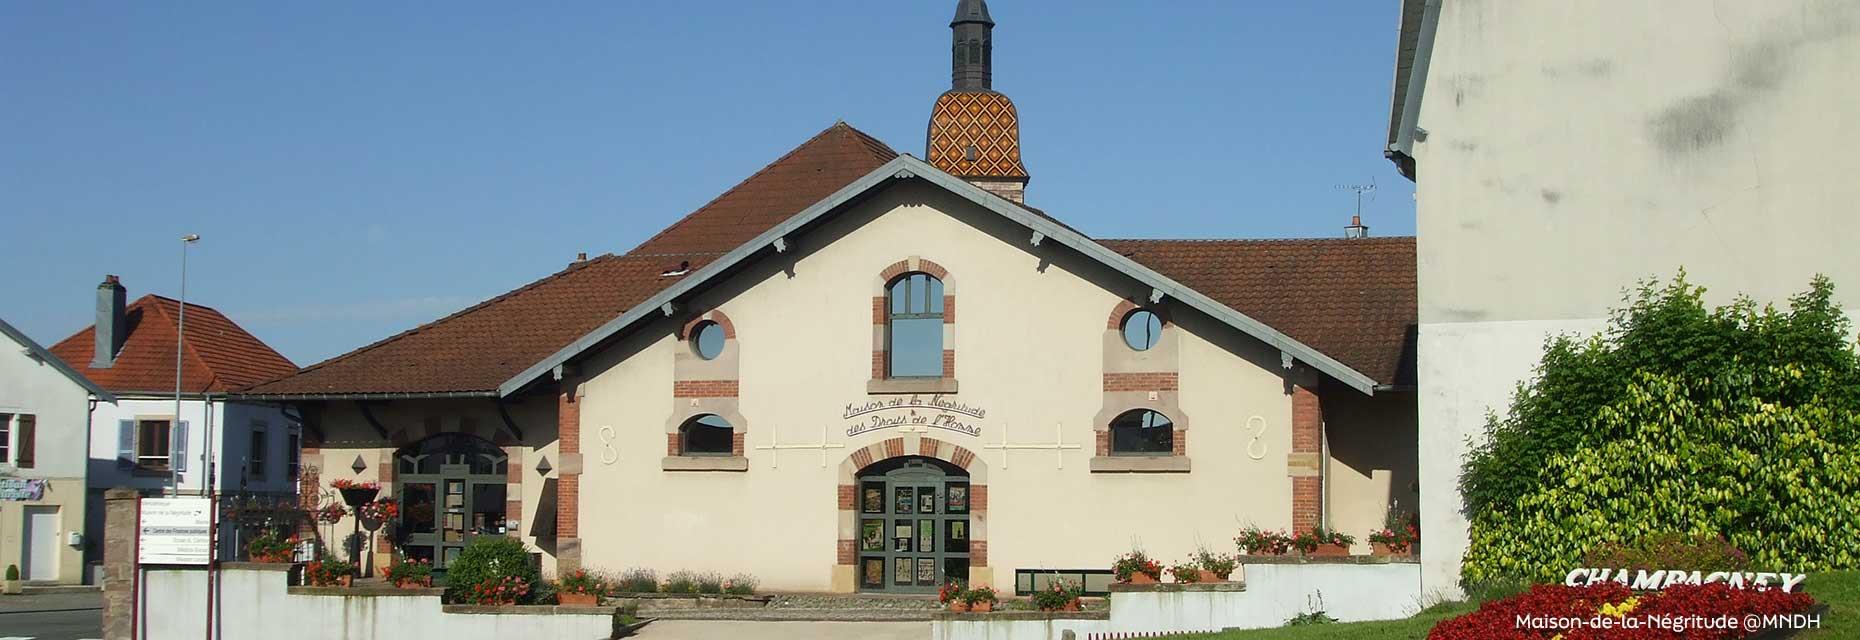 Besuch des Maison de la Négritude in Champagney in der Haute-Saône